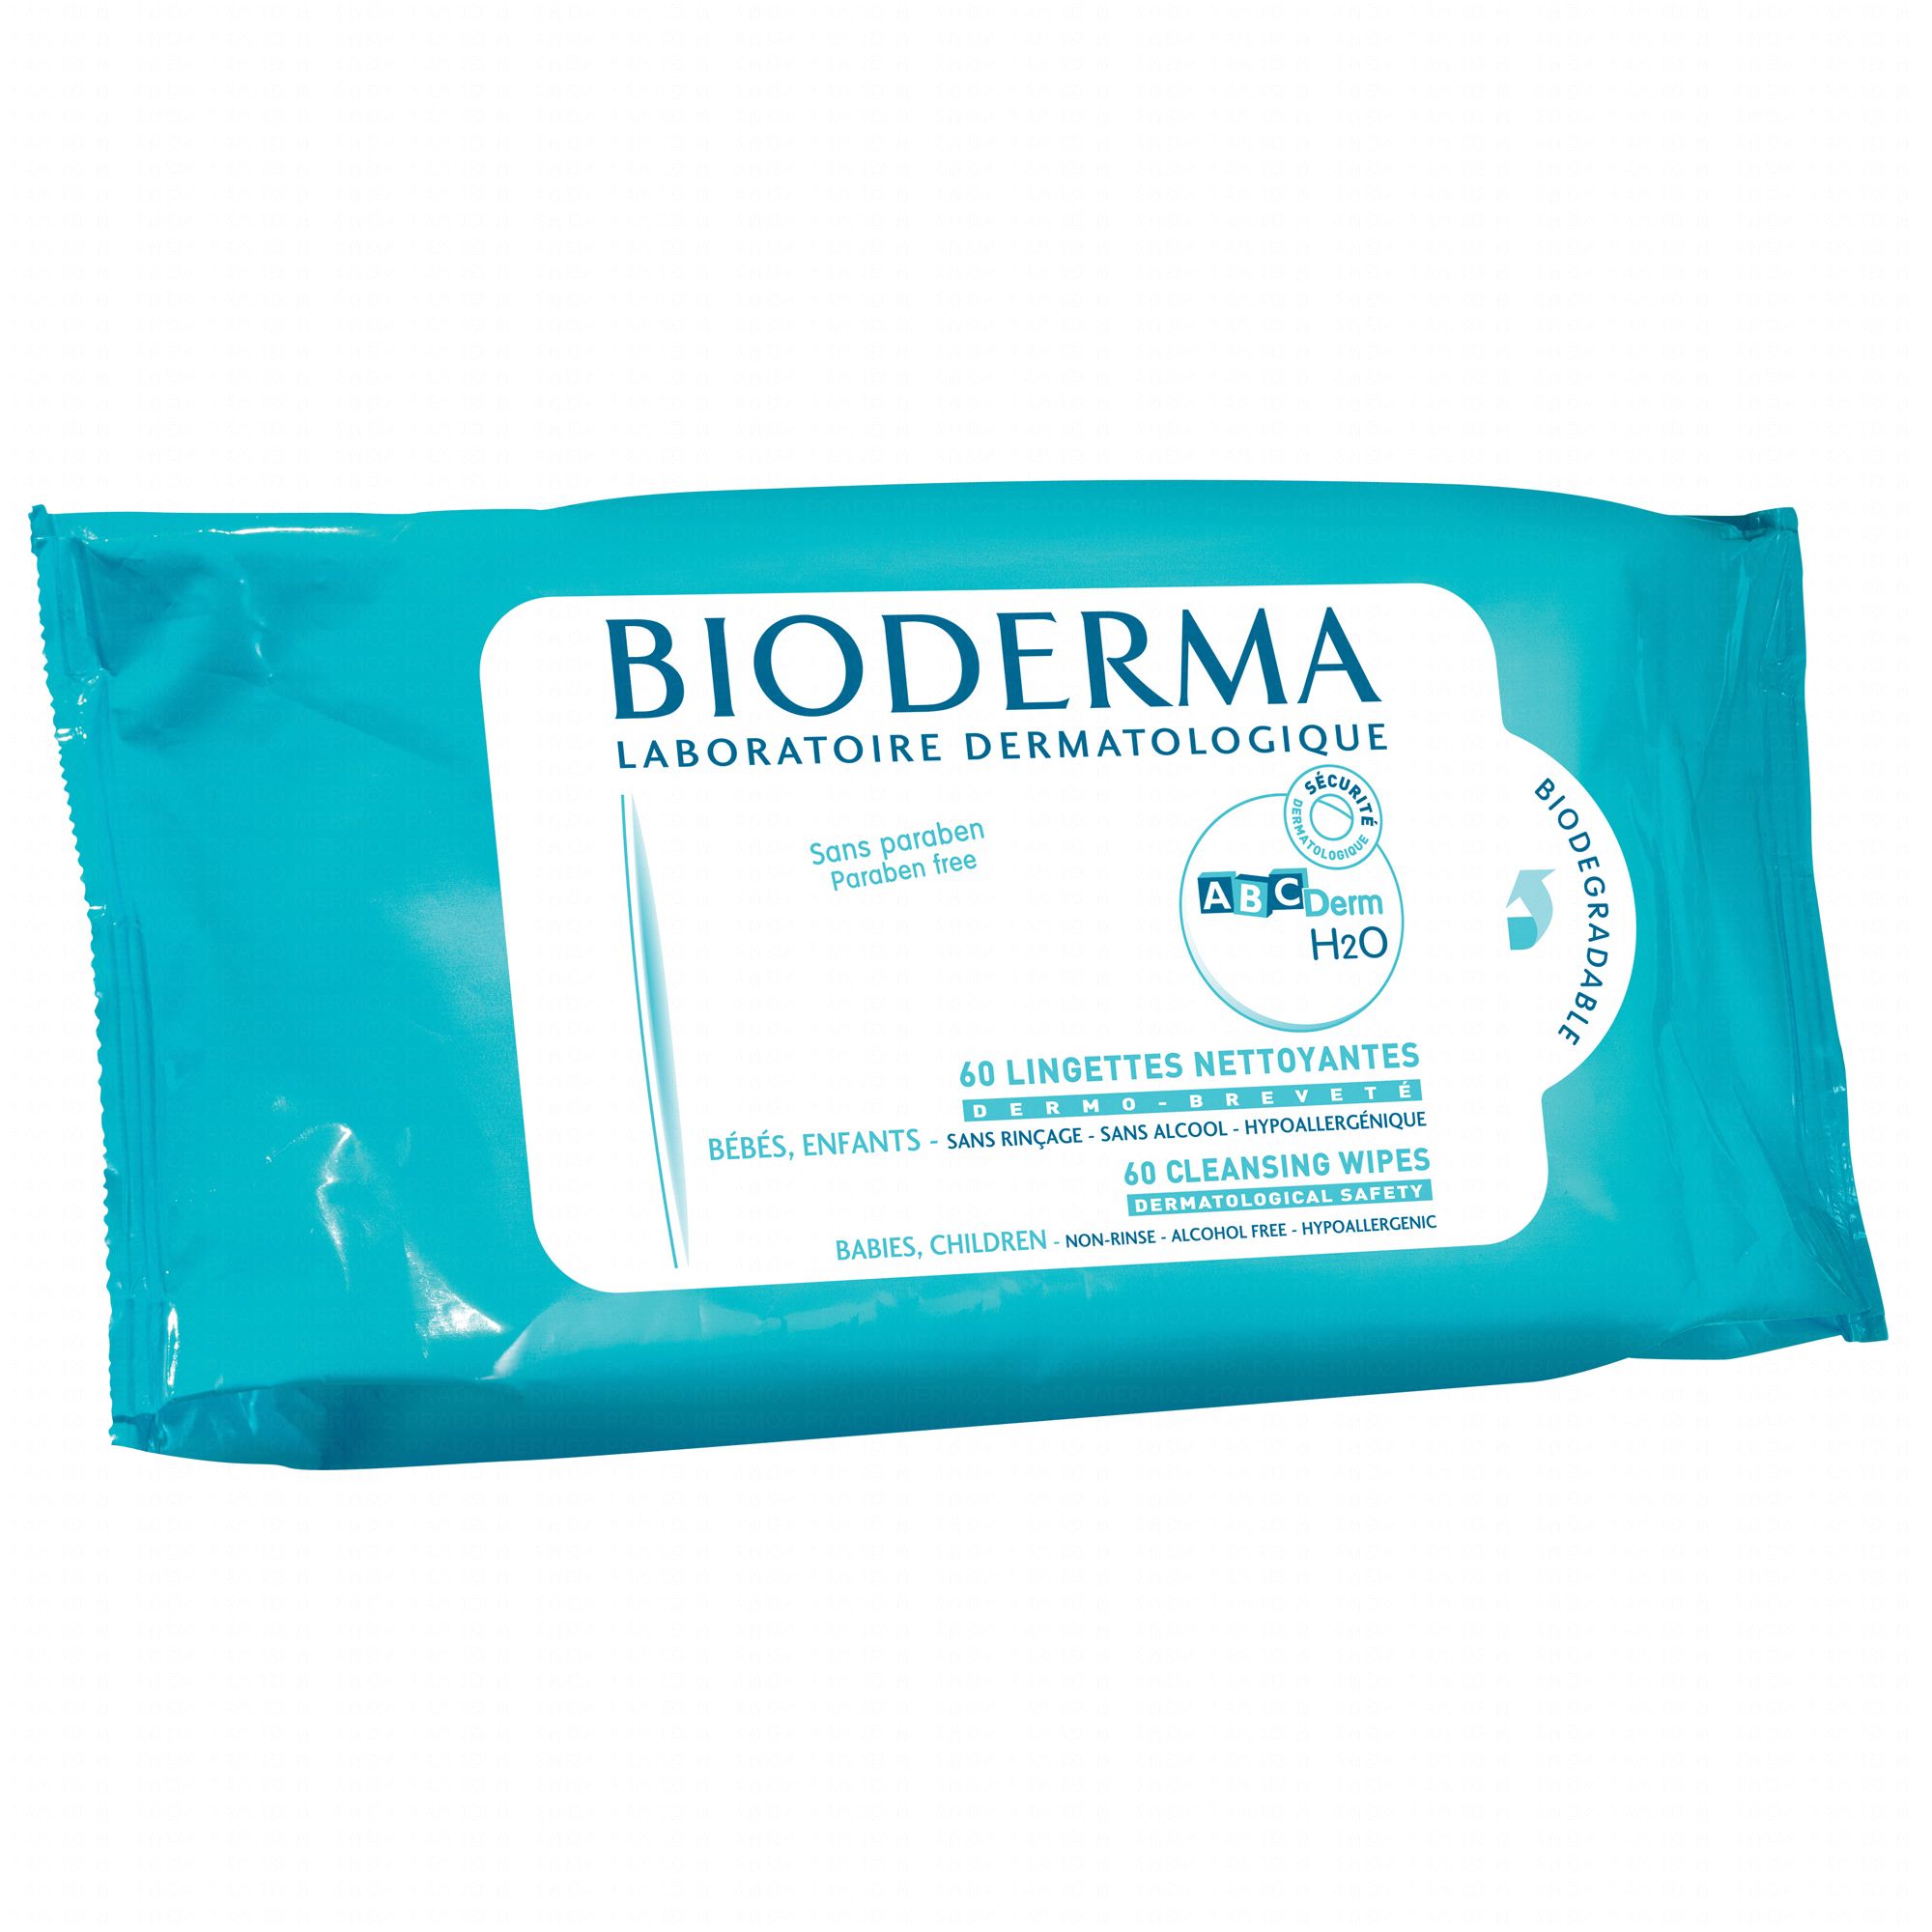 BIODERMA ABCderm H2O lingettes nettoyantes paquet de 60 lingettes -  Parapharmacie Prado Mermoz